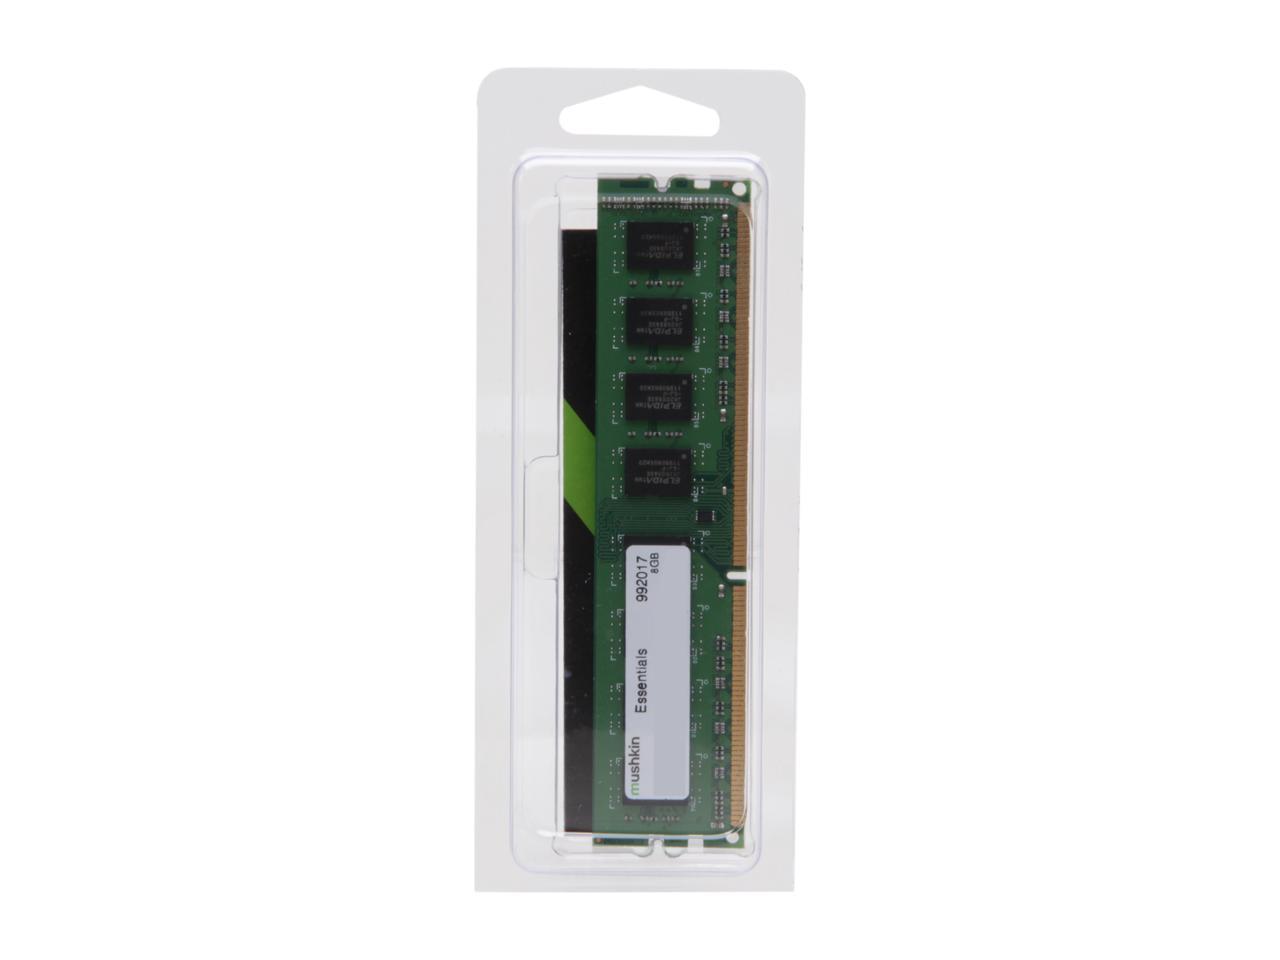 Mushkin Enhanced Essentials 8GB DDR3 1333 (PC3 10600) Desktop Memory Model 992017